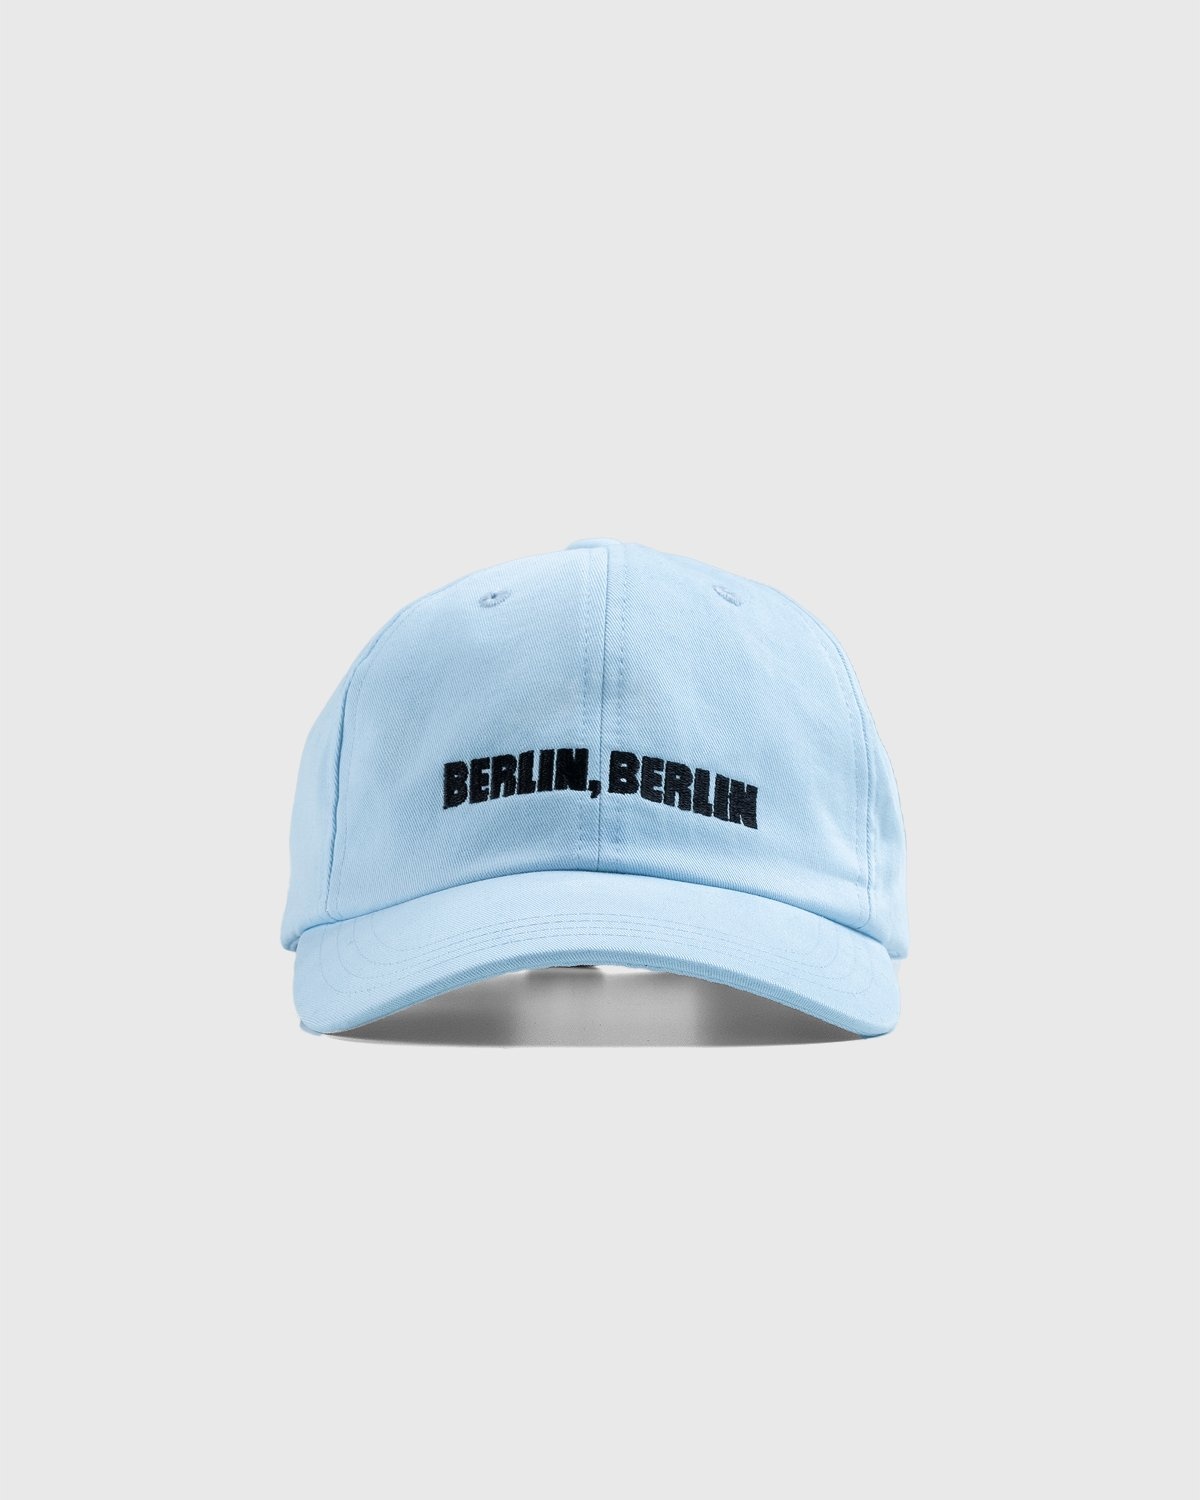 Highsnobiety – Berlin Berlin 2 Cap Blue - Hats - Blue - Image 3